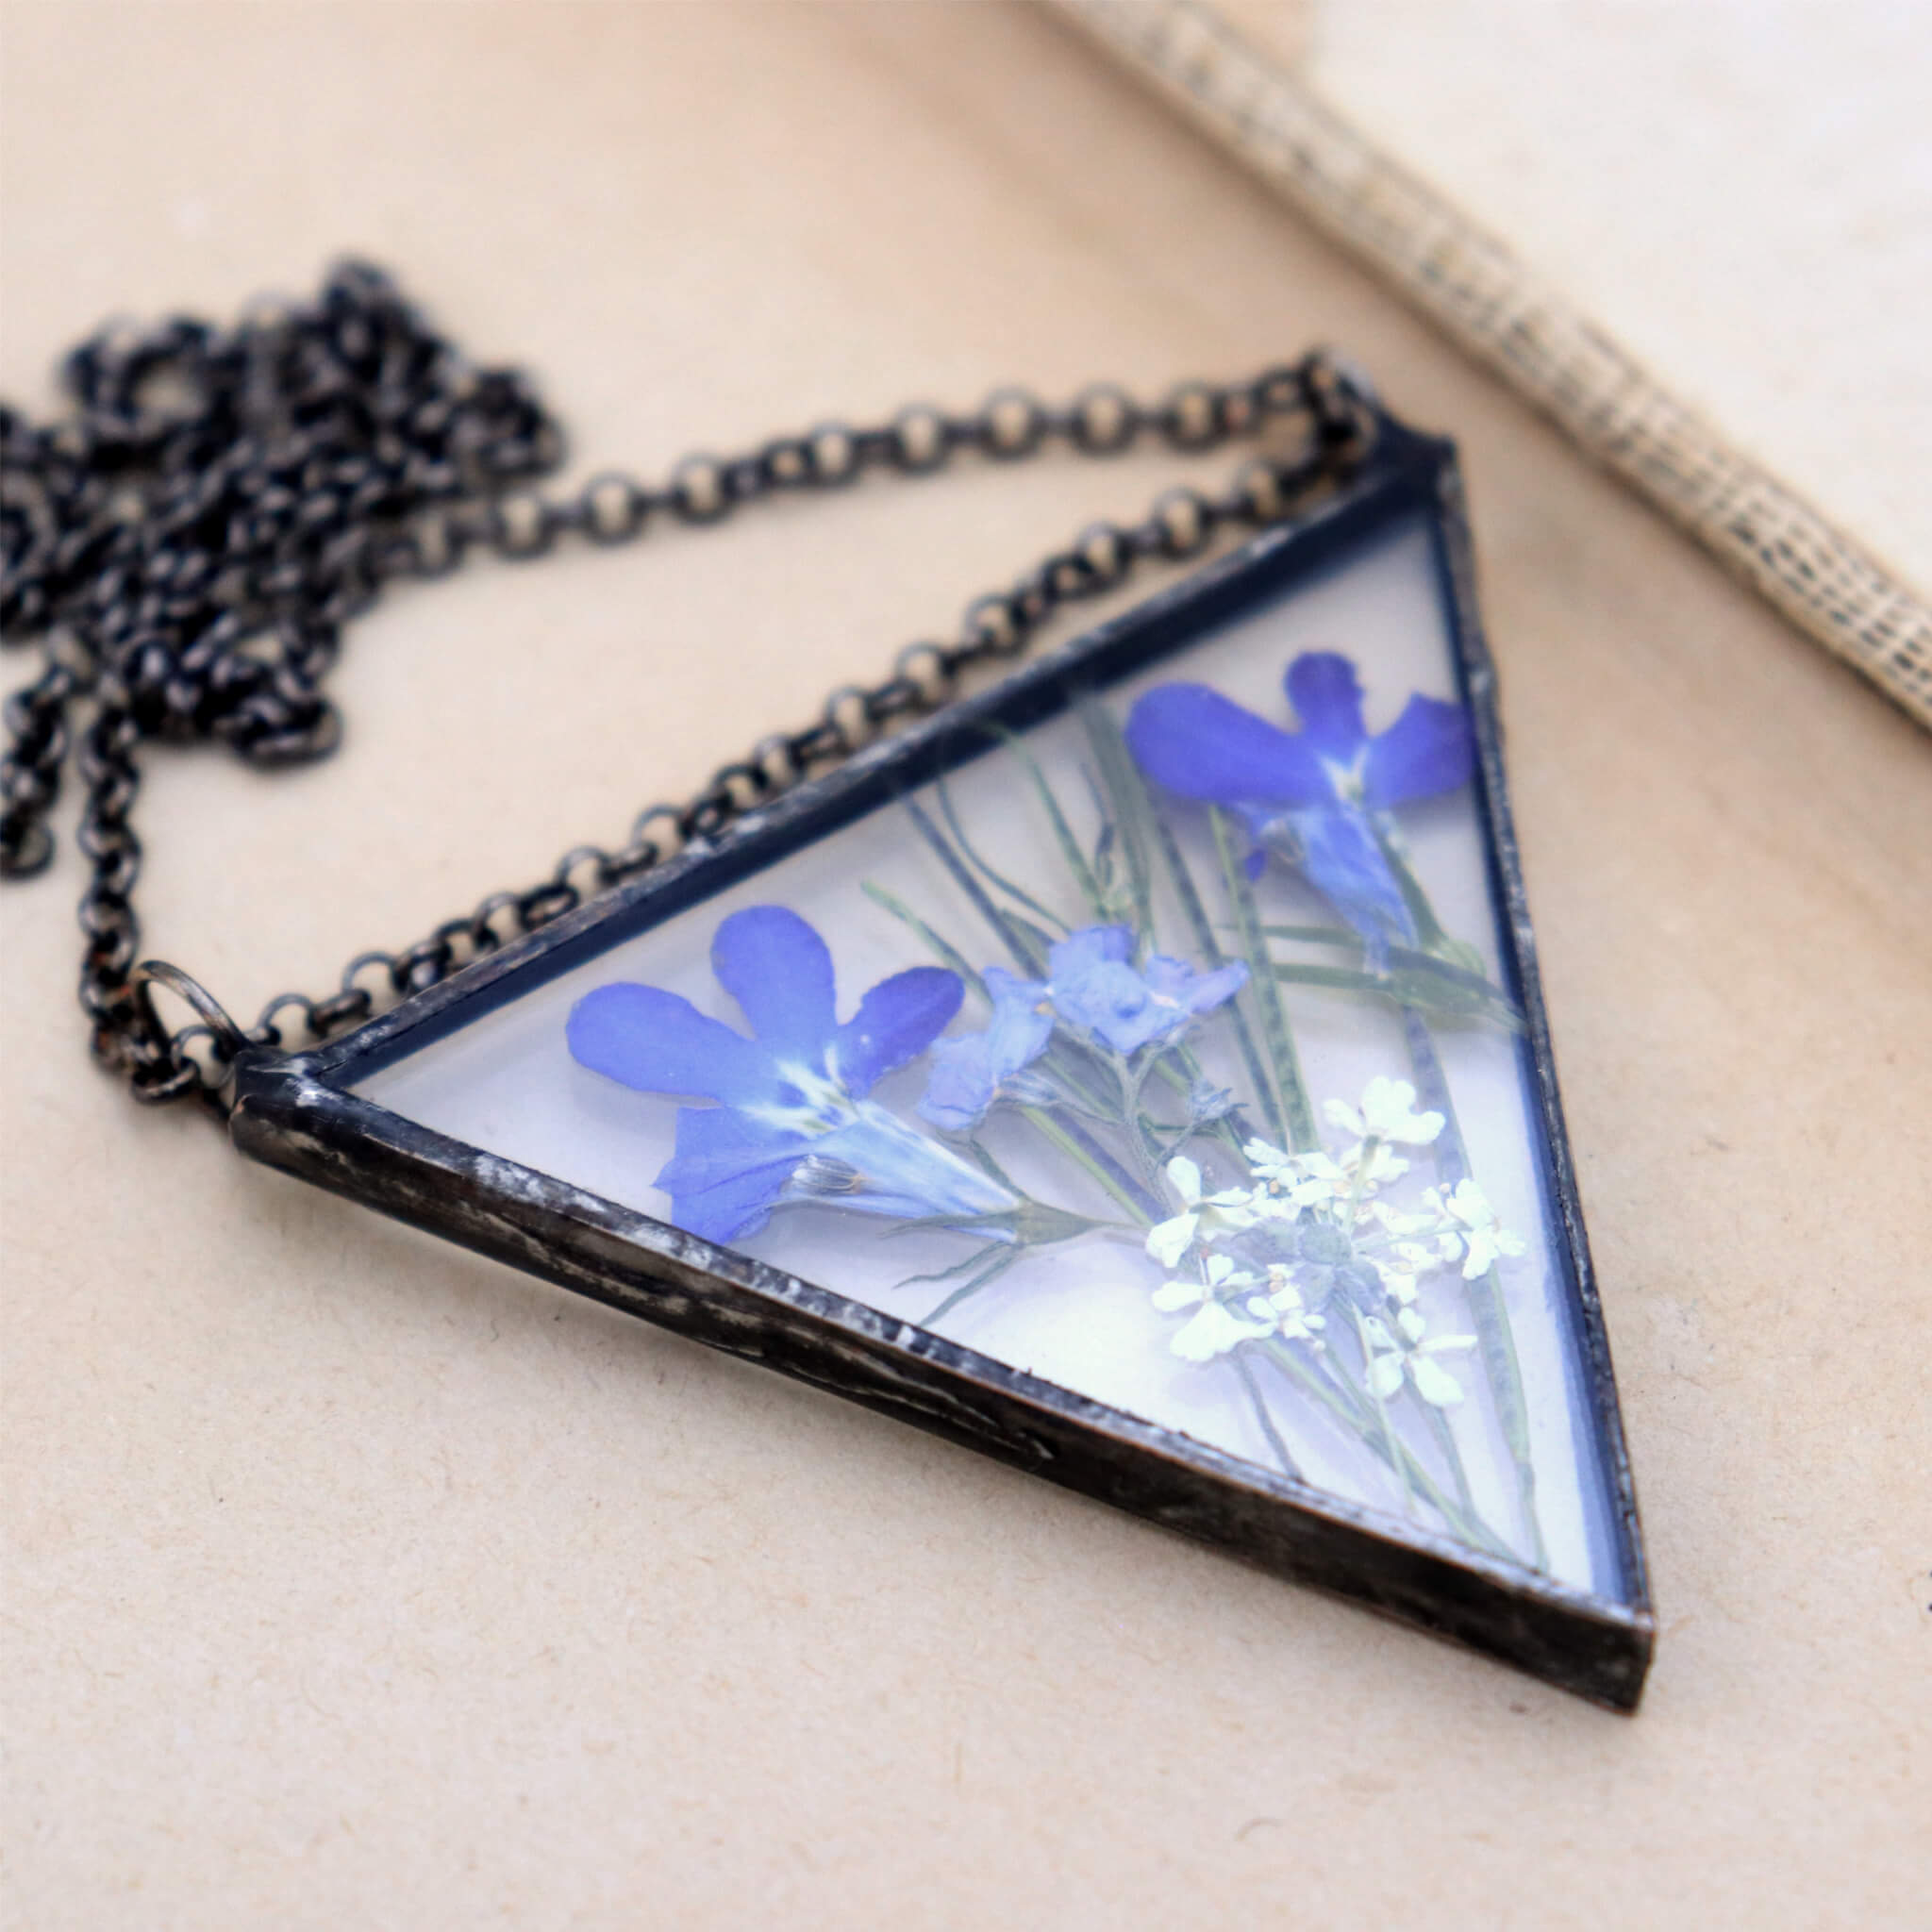 Triangular pressed lobelia flowers necklace lying on a vintage book